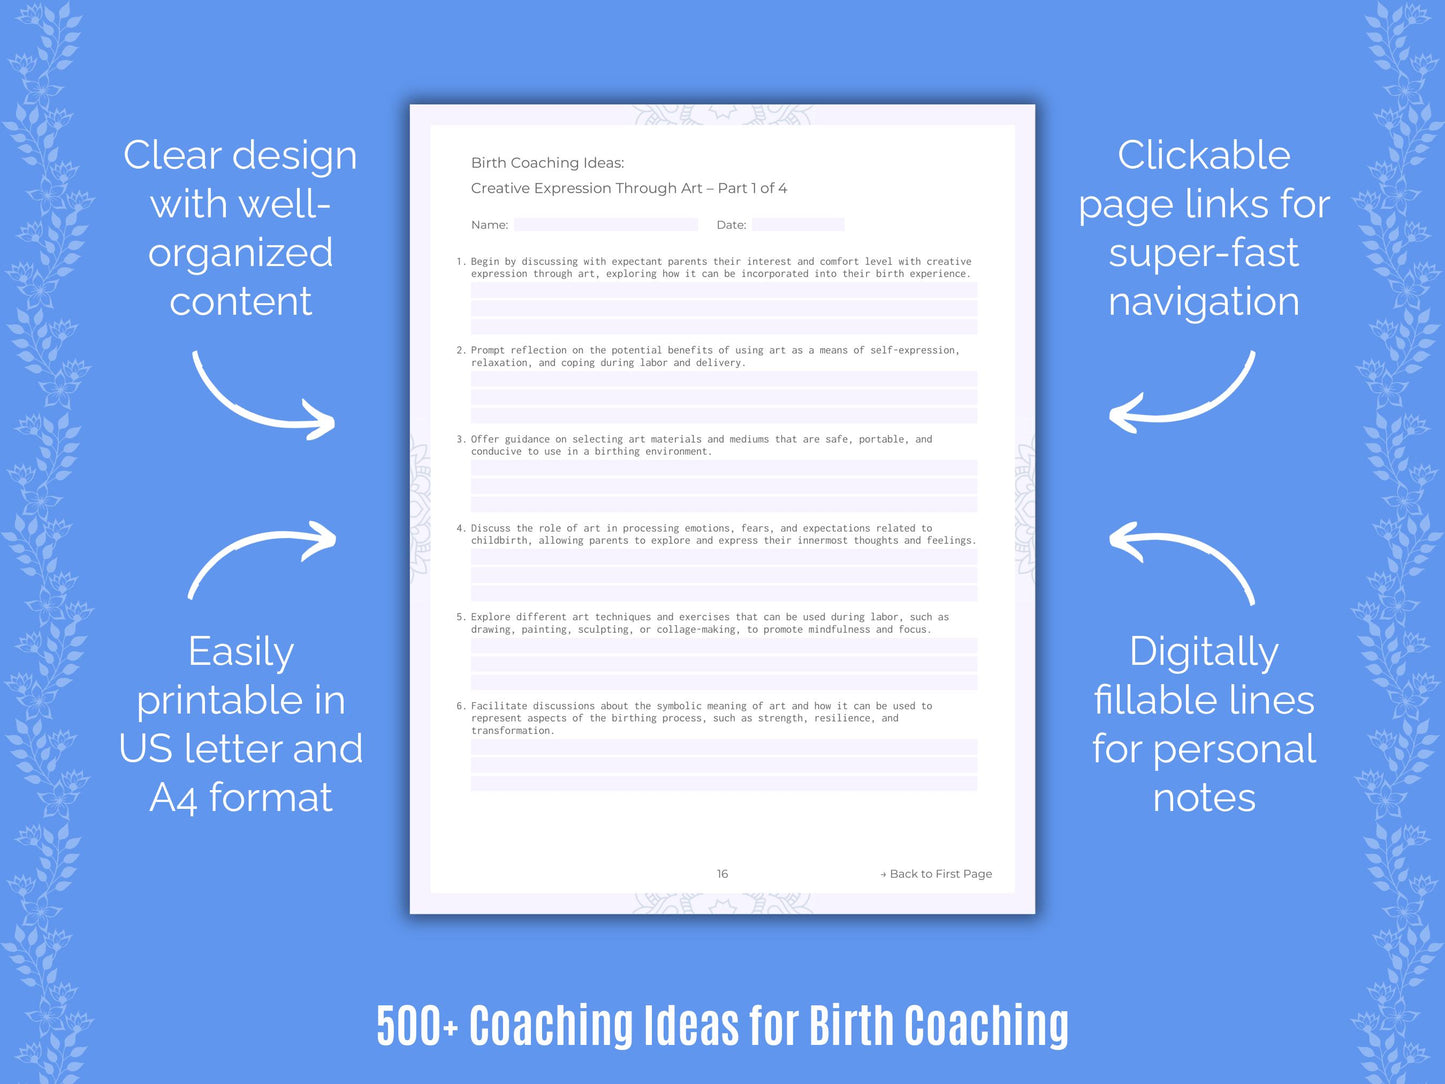 Birth Coaching Ideas Resource